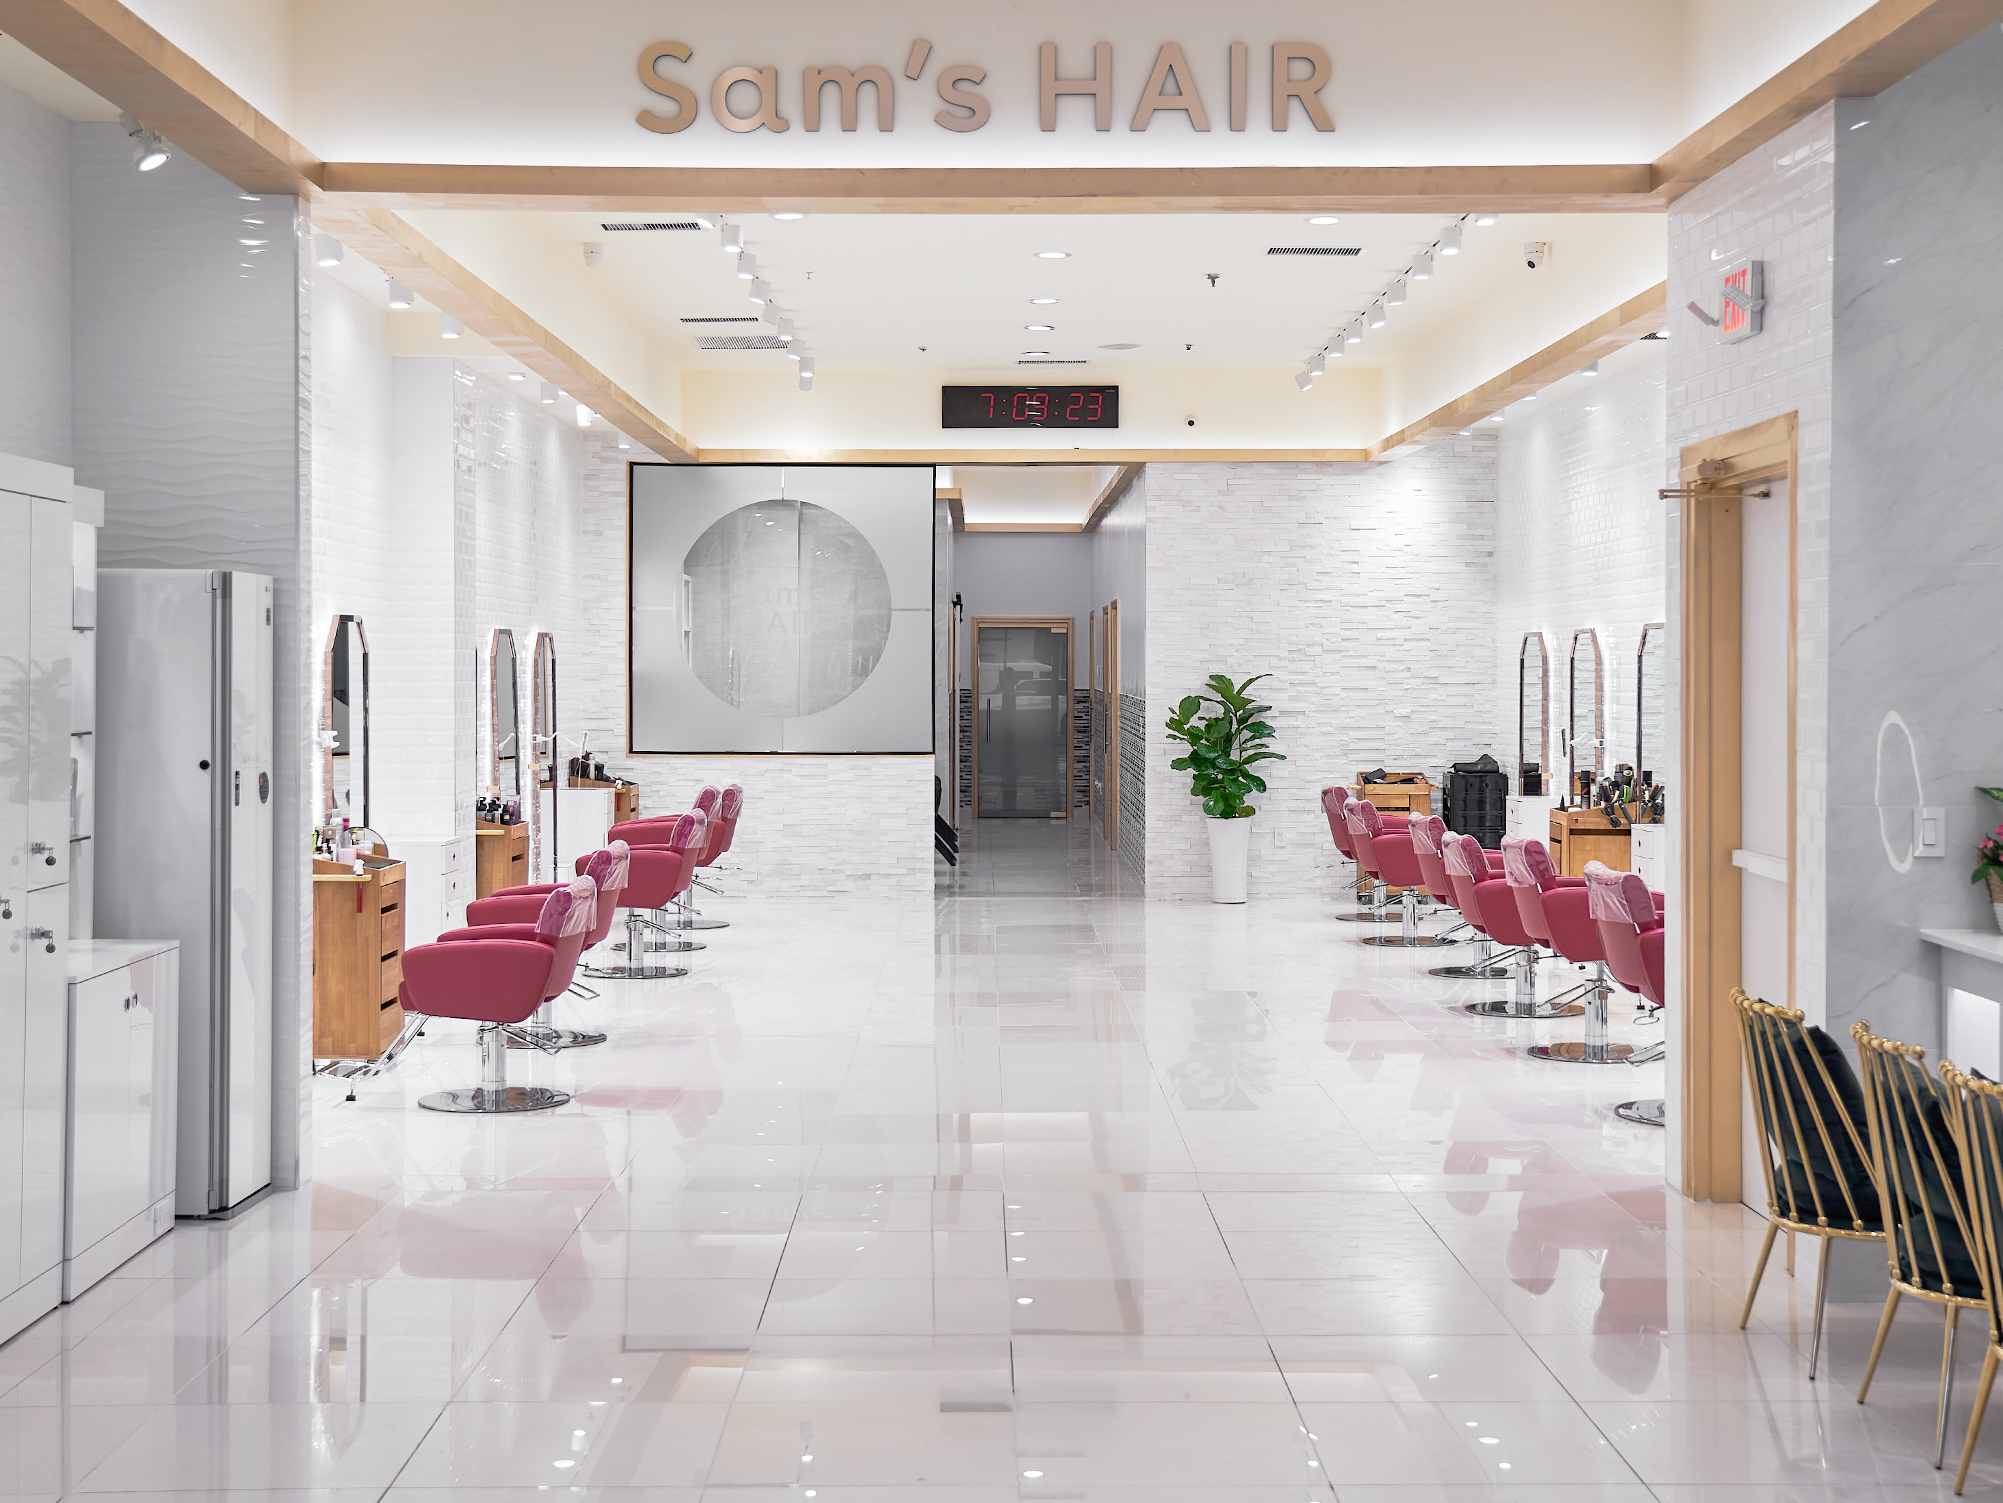 Sam's HAIR | Nail & Facial Salon